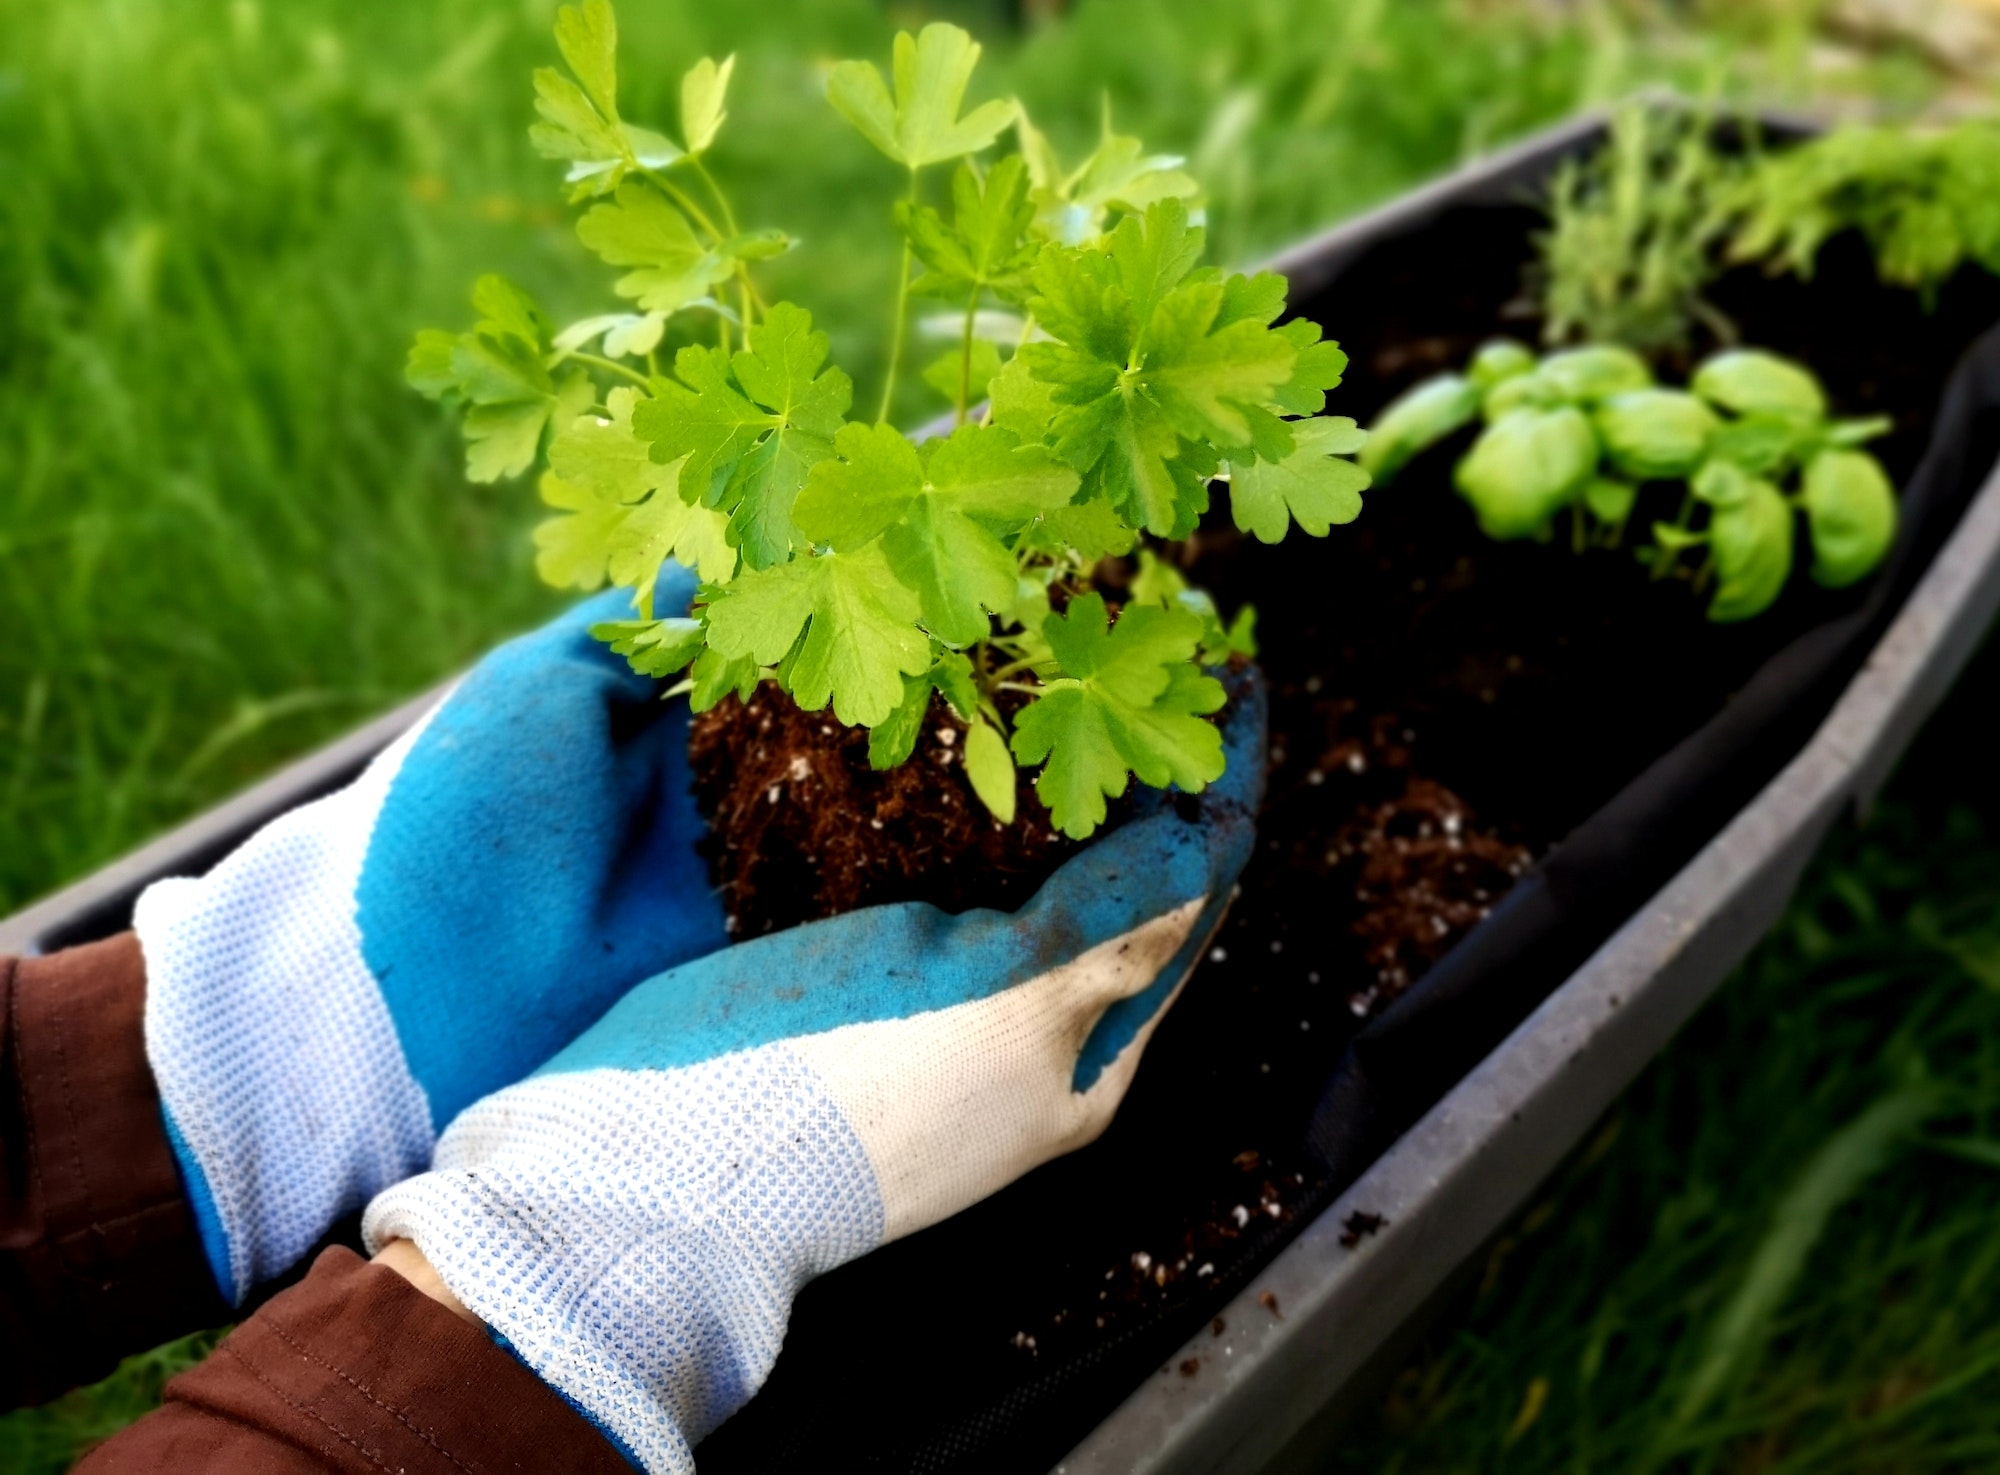 Hands in garden gloves planting parsley in planter for balcony garden